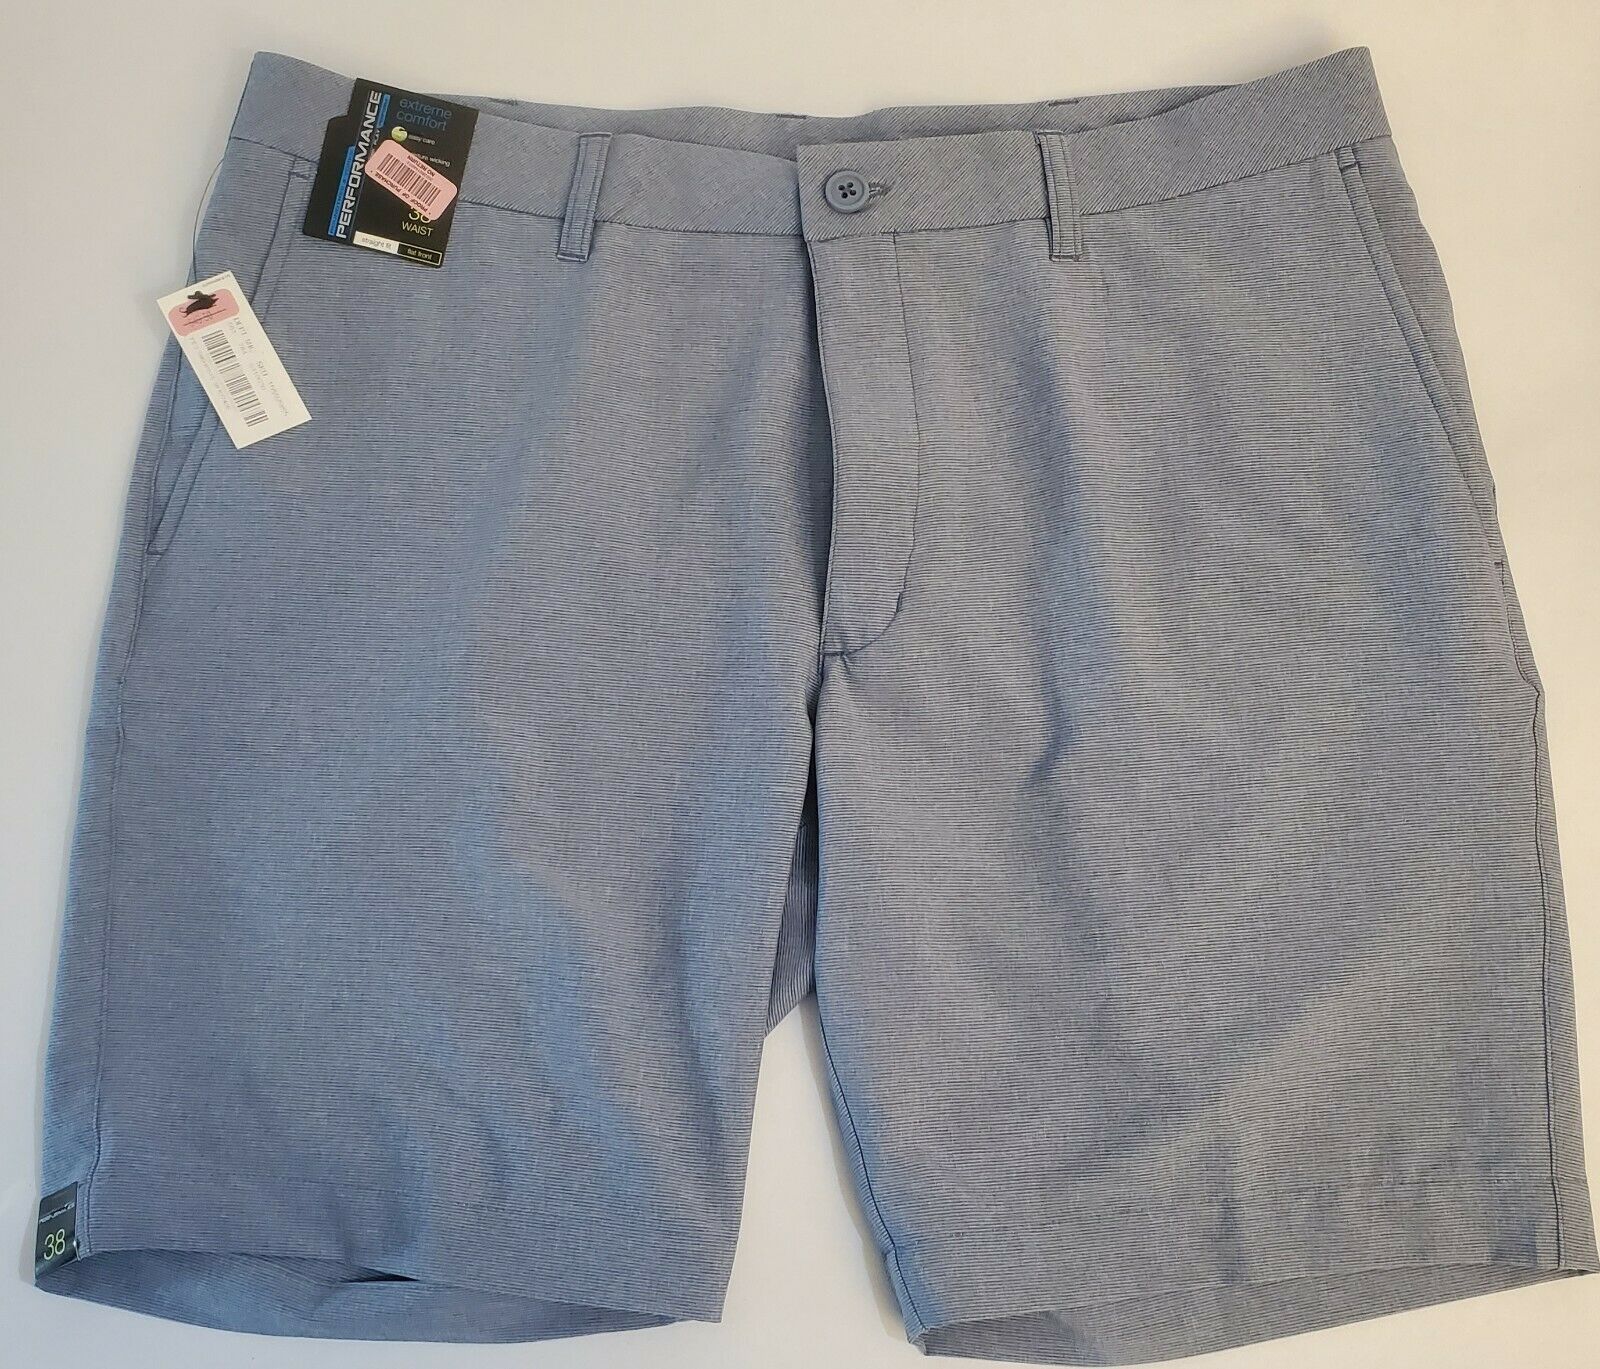 Roundtree & Yorke Men's Performance Shorts - Size 38 - Retail $49.50 ...